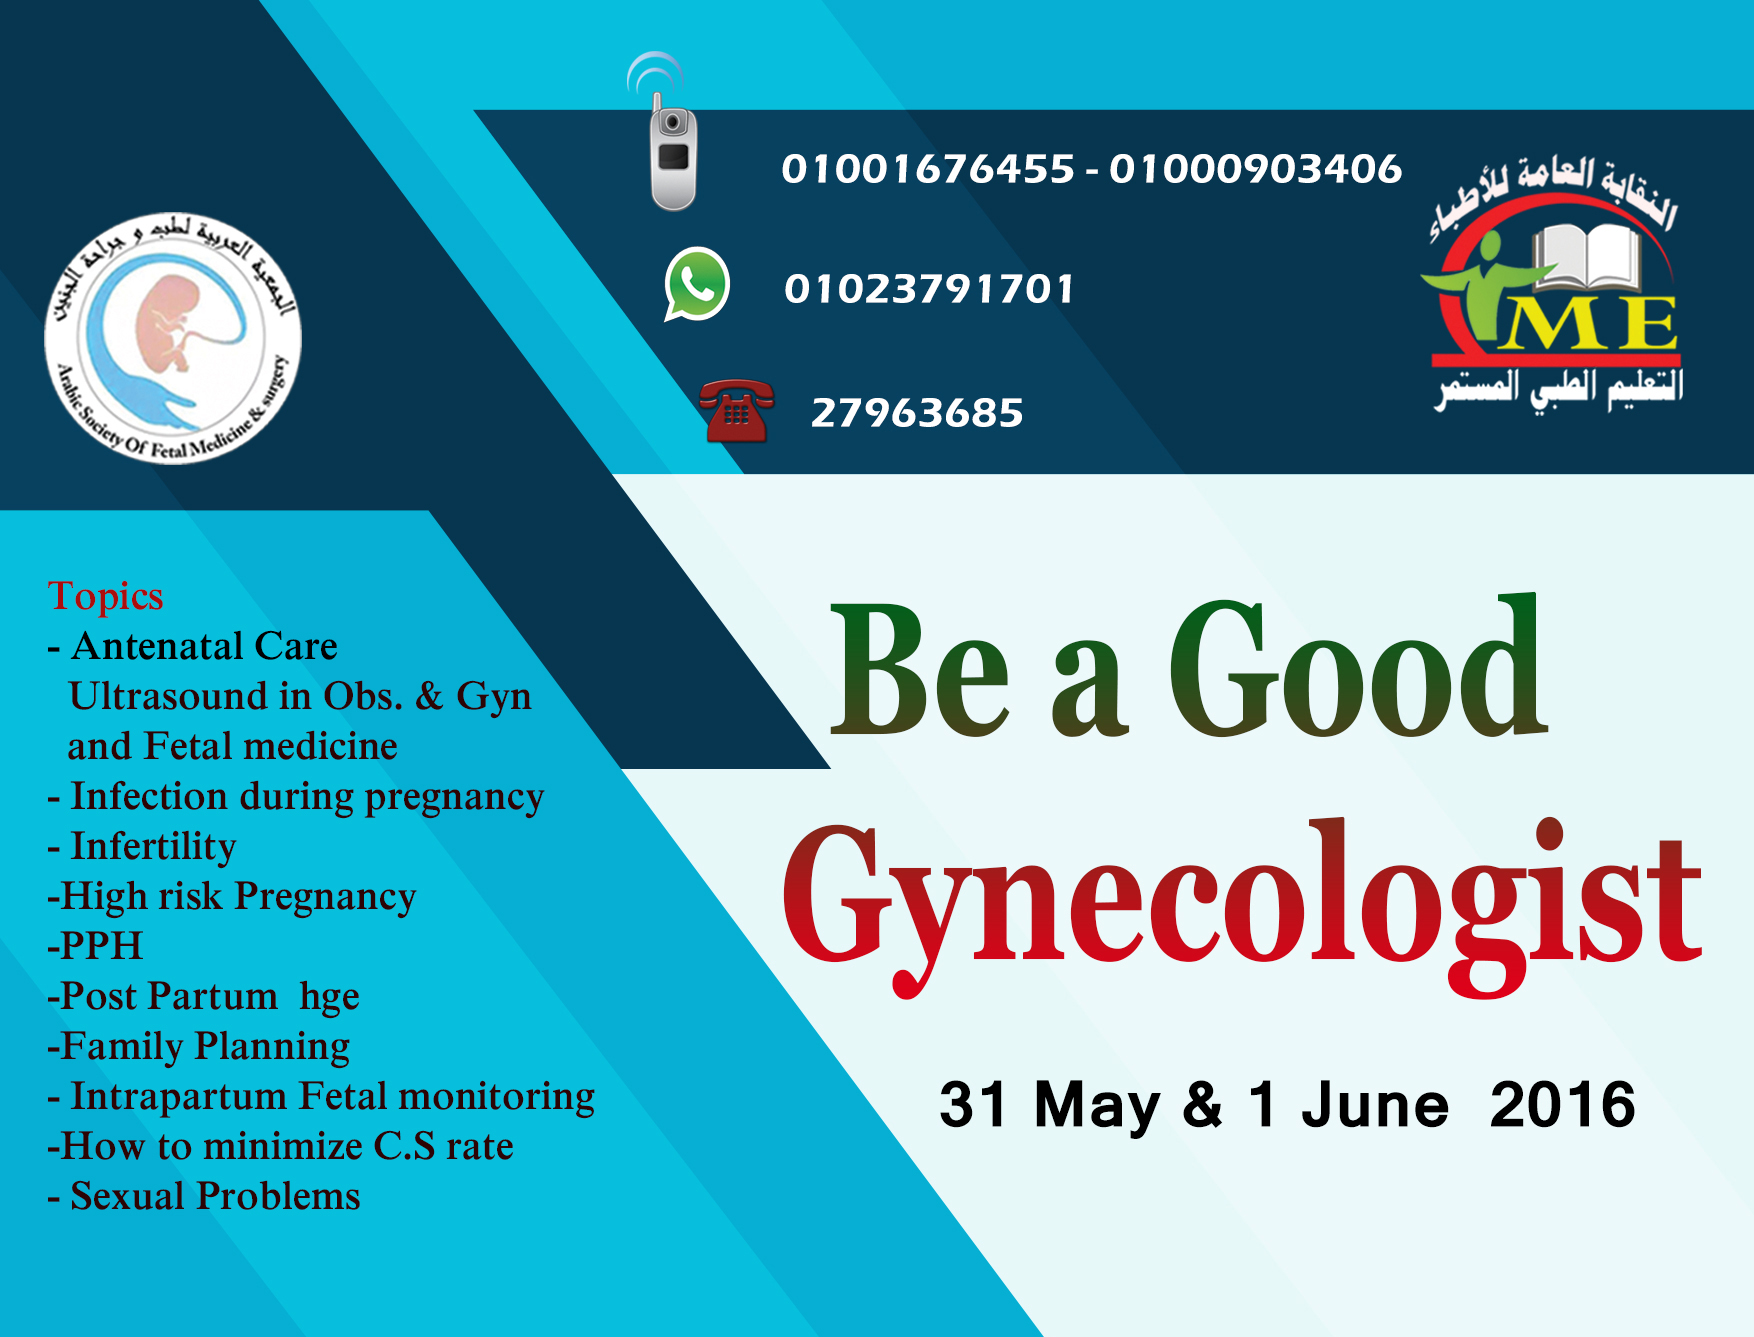 Be a good gynecologist